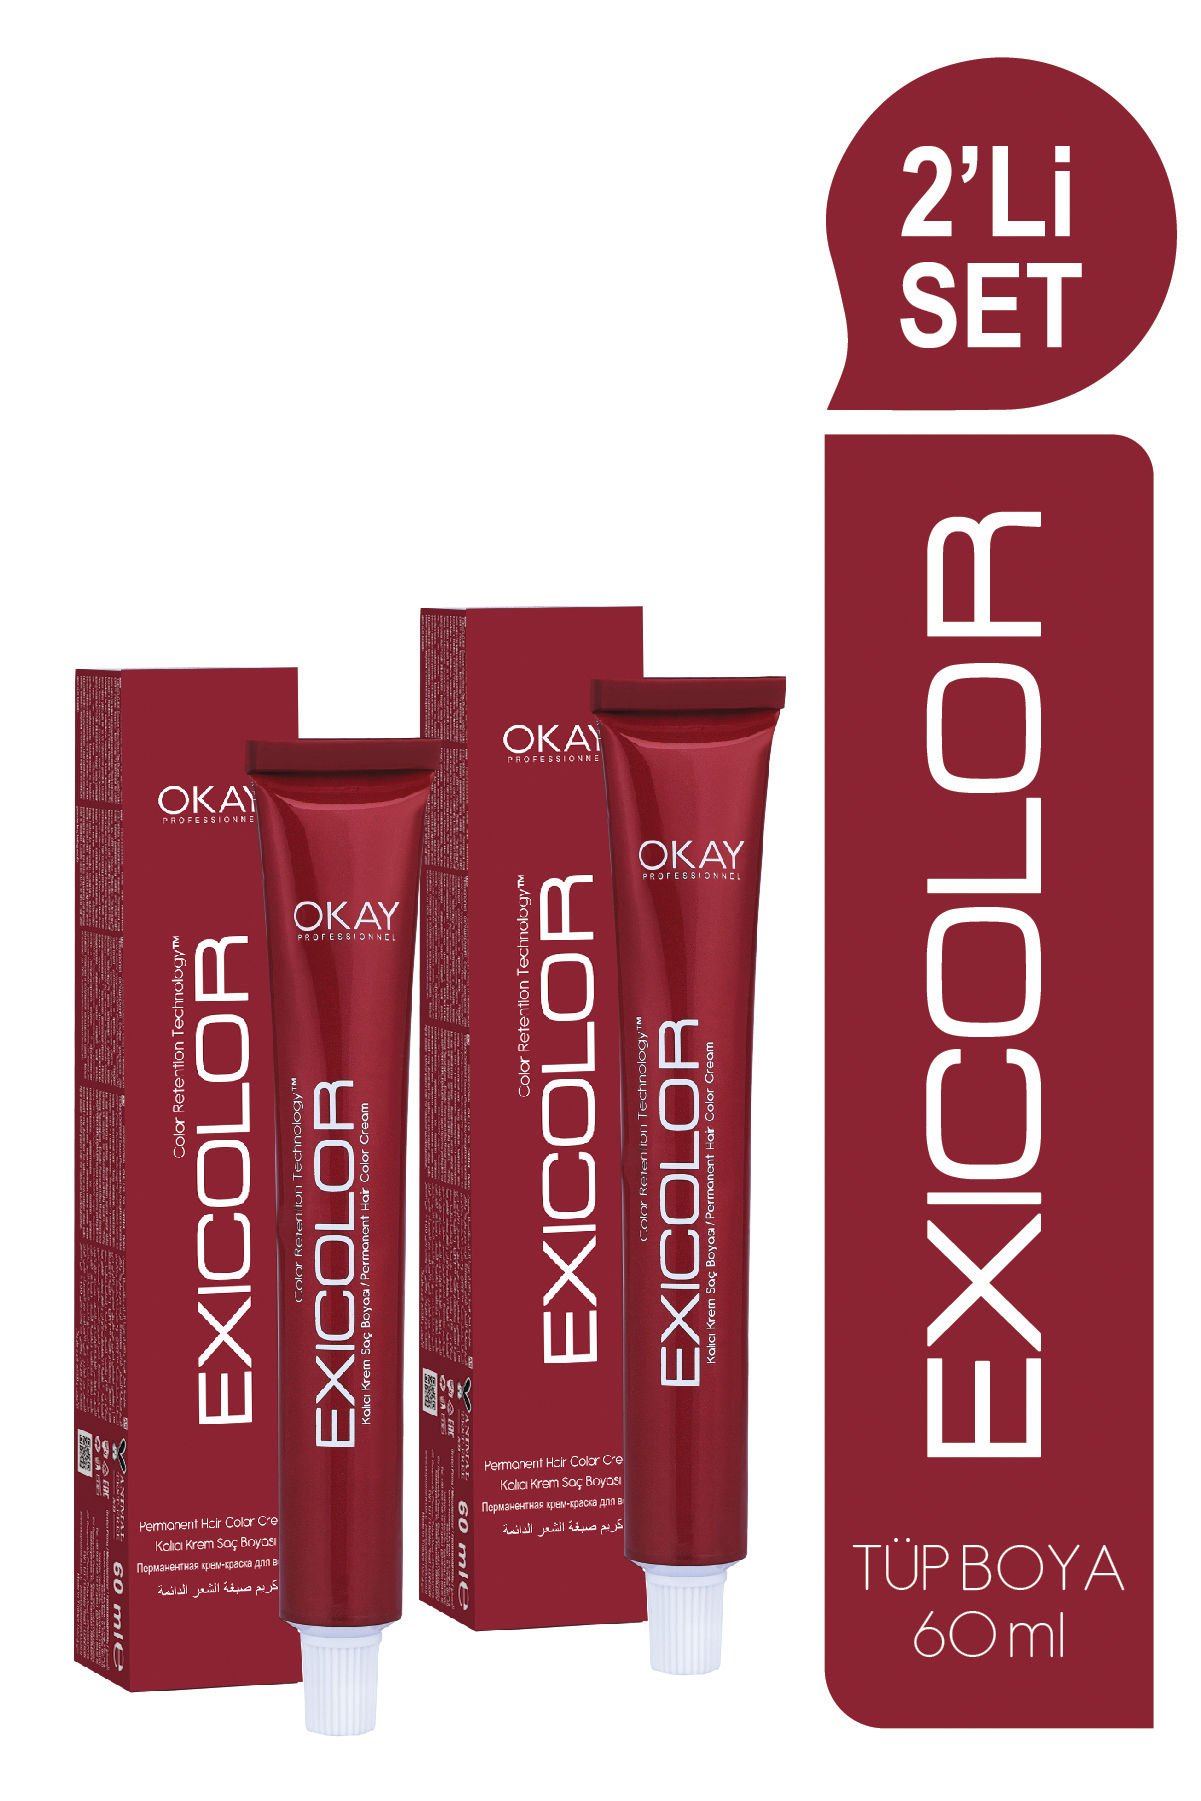 EXICOLOR 2'Lİ SET 9.0 YOĞUN ÇOK AÇIK KUMRAL Kalıcı Krem Saç Boyası (60ml x 2 adet)